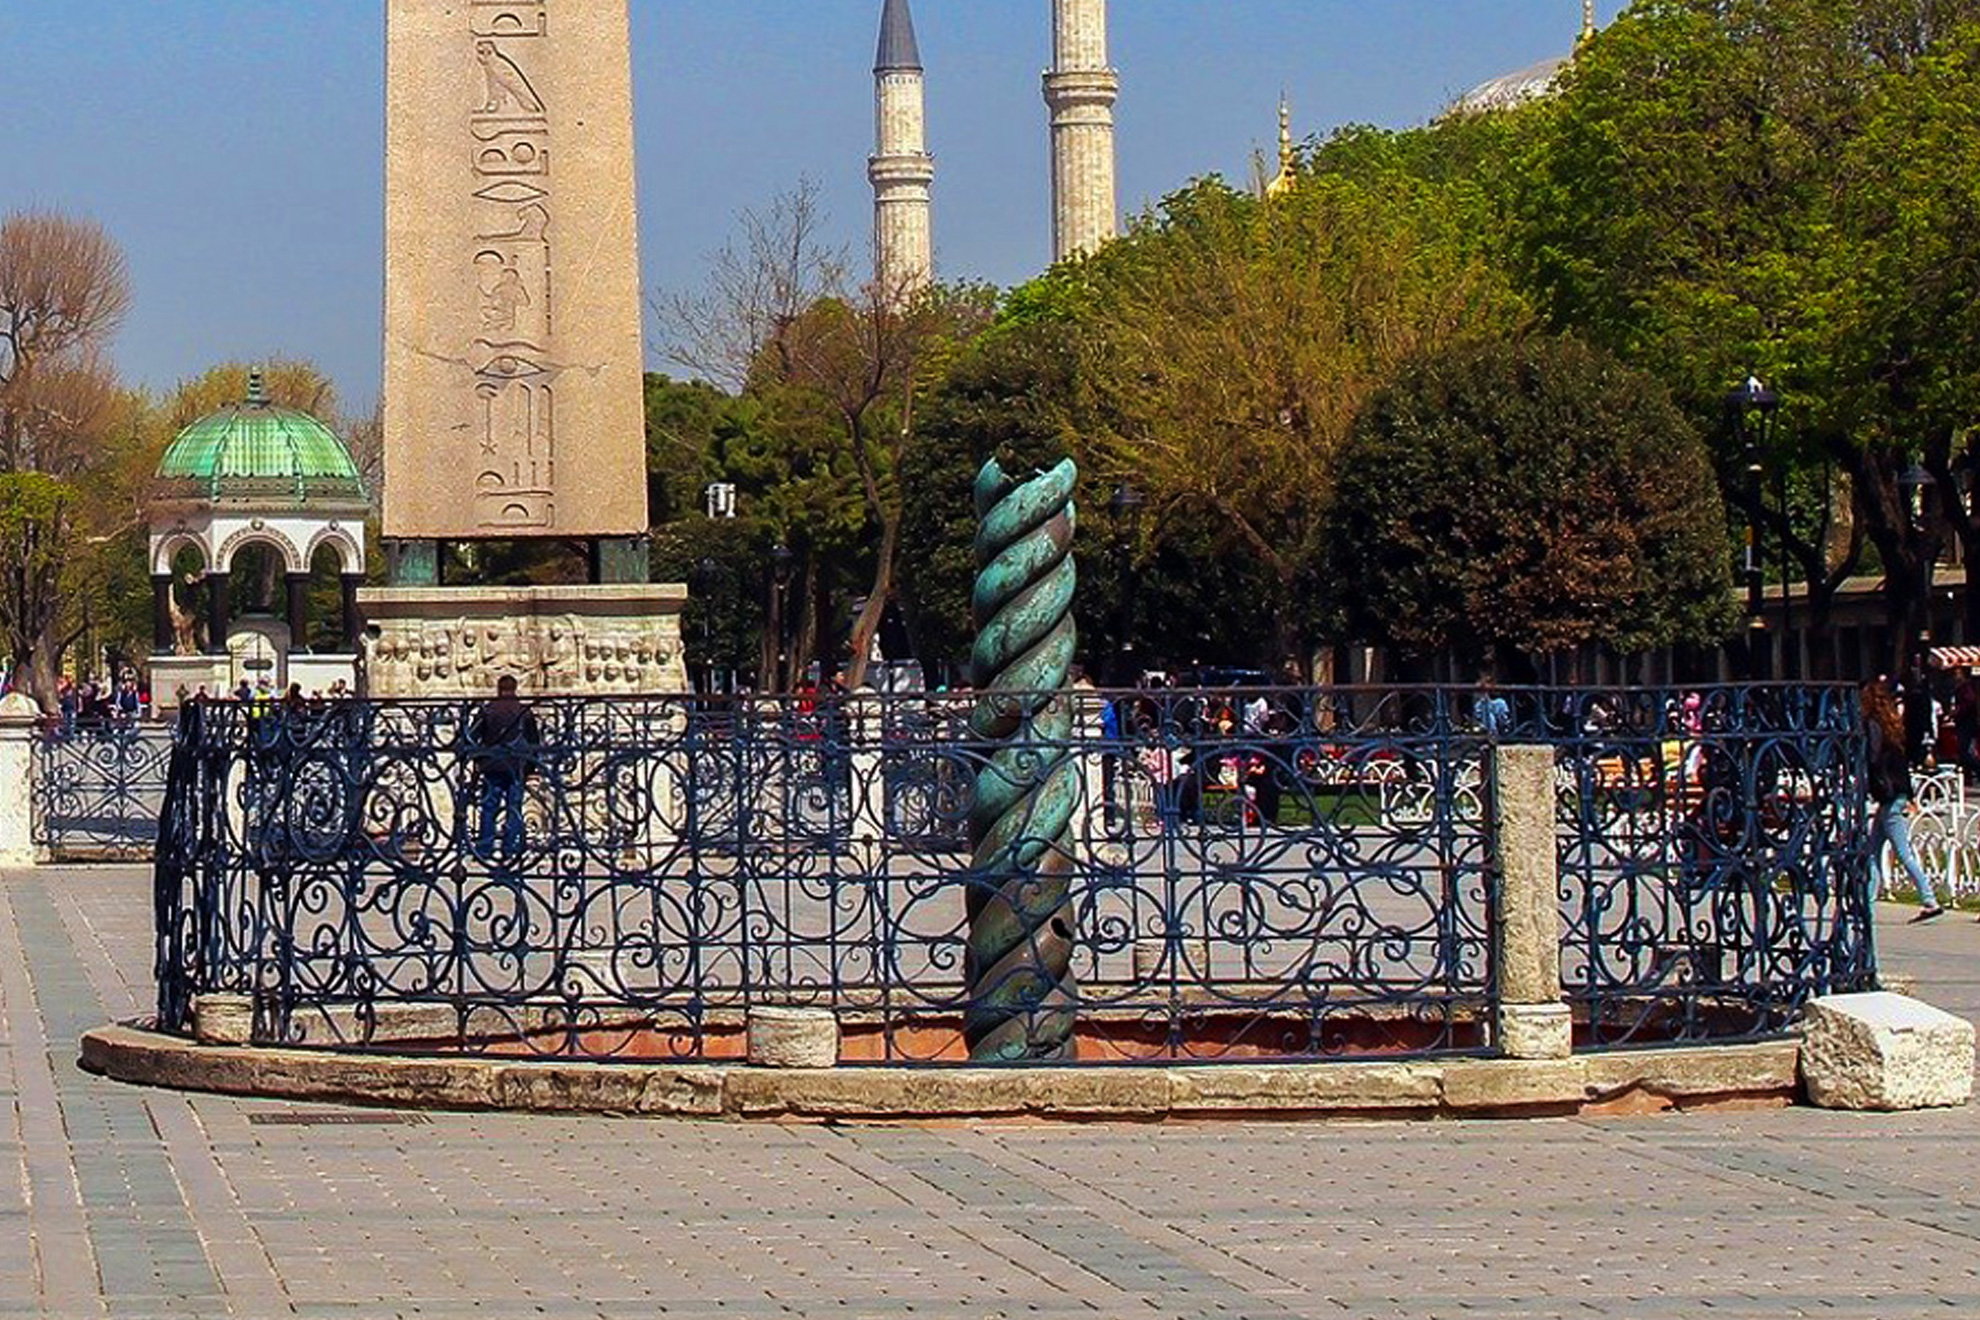 Великден и Светите места в Истанбул, 3 нощувки - Змиевидната колона, Истанбул, Турция - "Snake column" or "Serpents column", Istanbul, Turkey